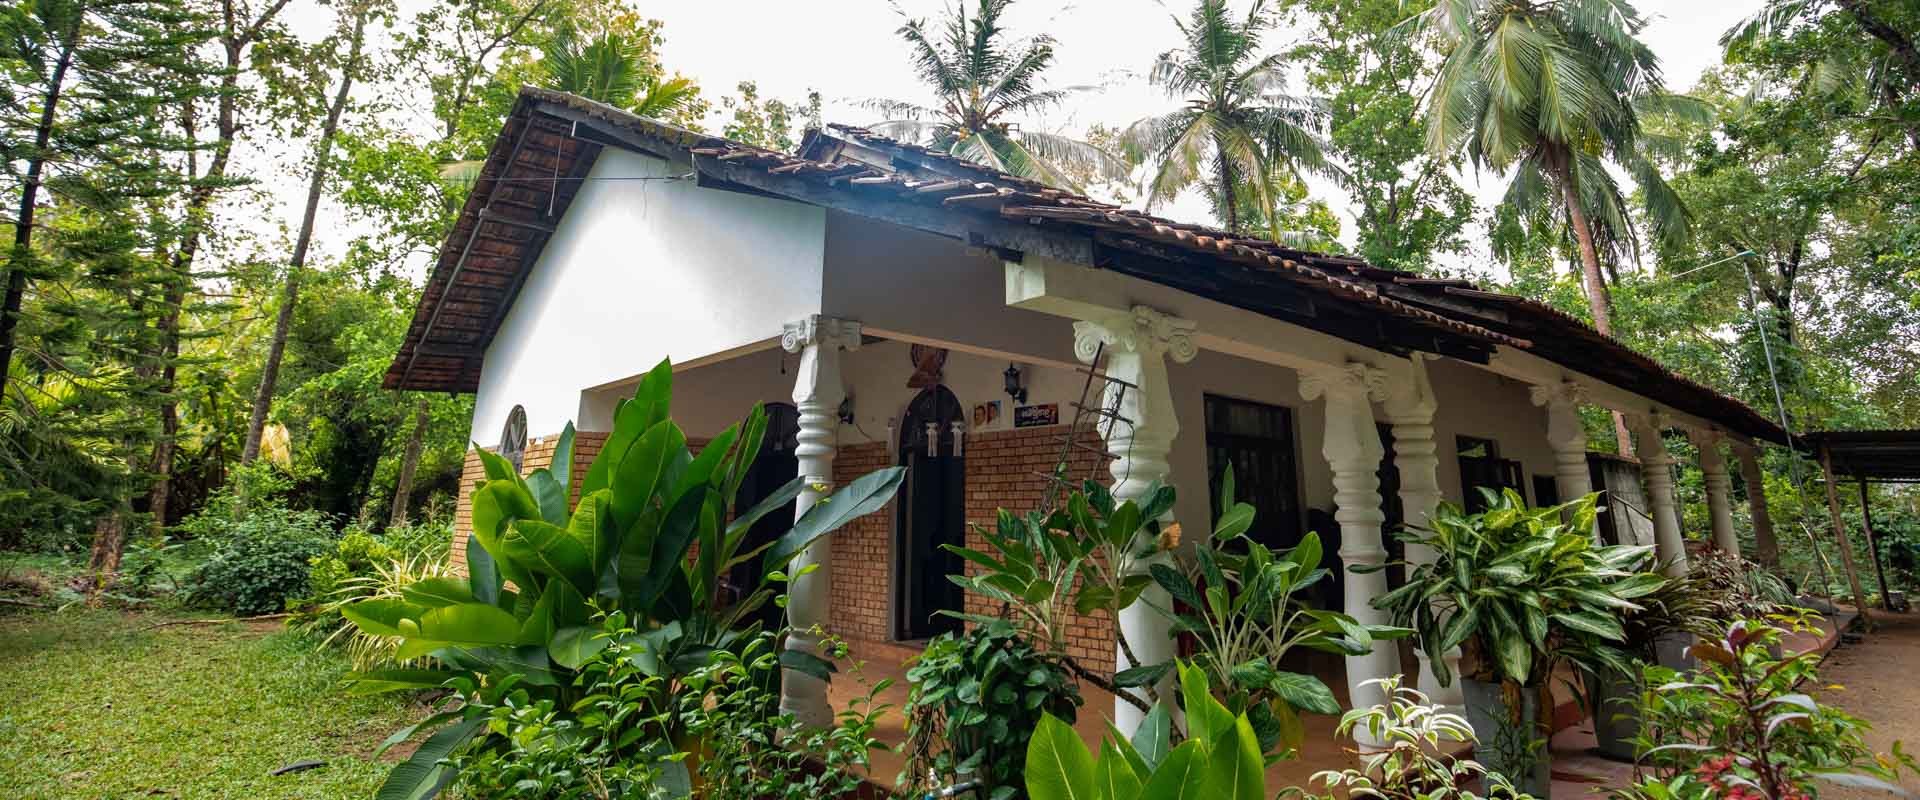 Maha Gedara home stay - Gateway to East